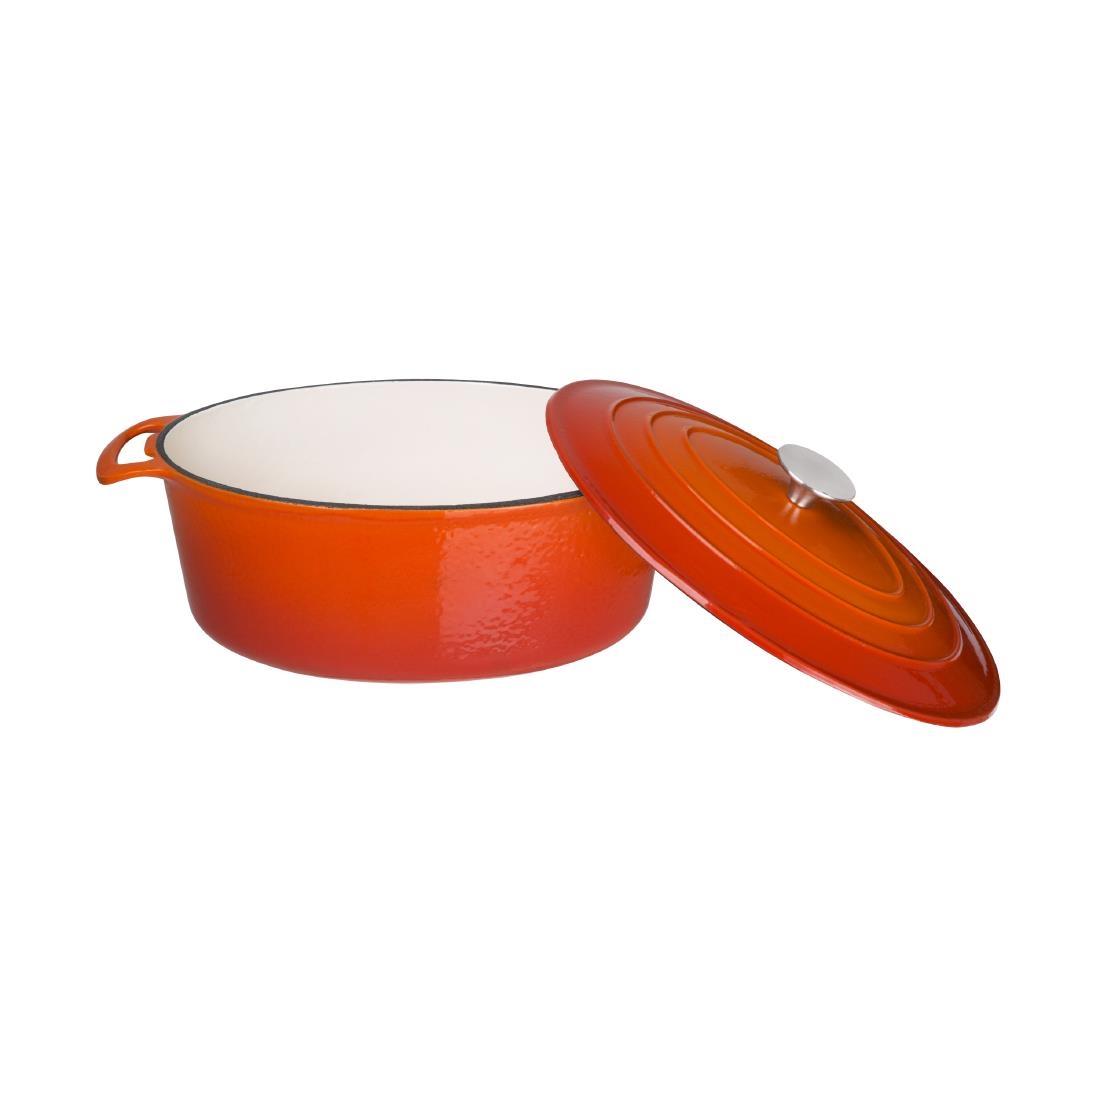 Vogue Orange Oval Casserole Dish 6Ltr - GH312  - 3